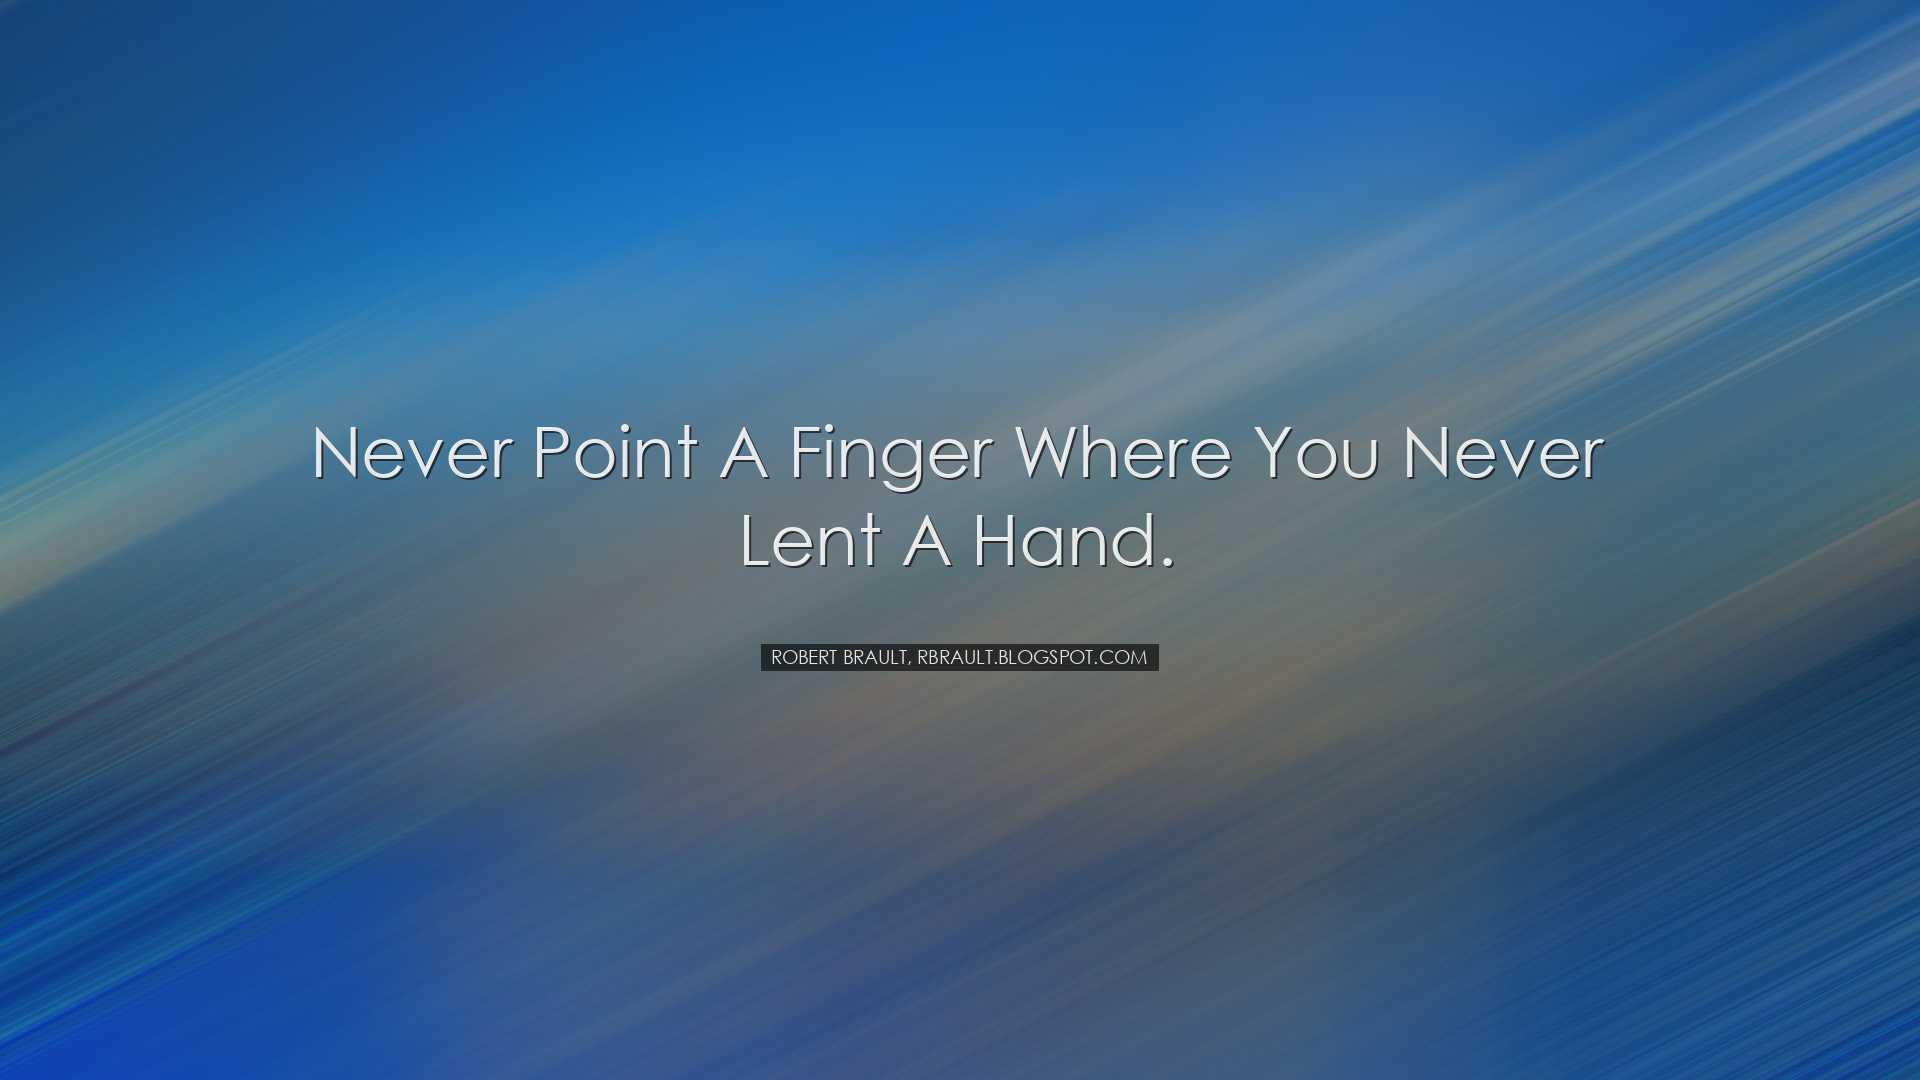 Never point a finger where you never lent a hand. - Robert Brault,